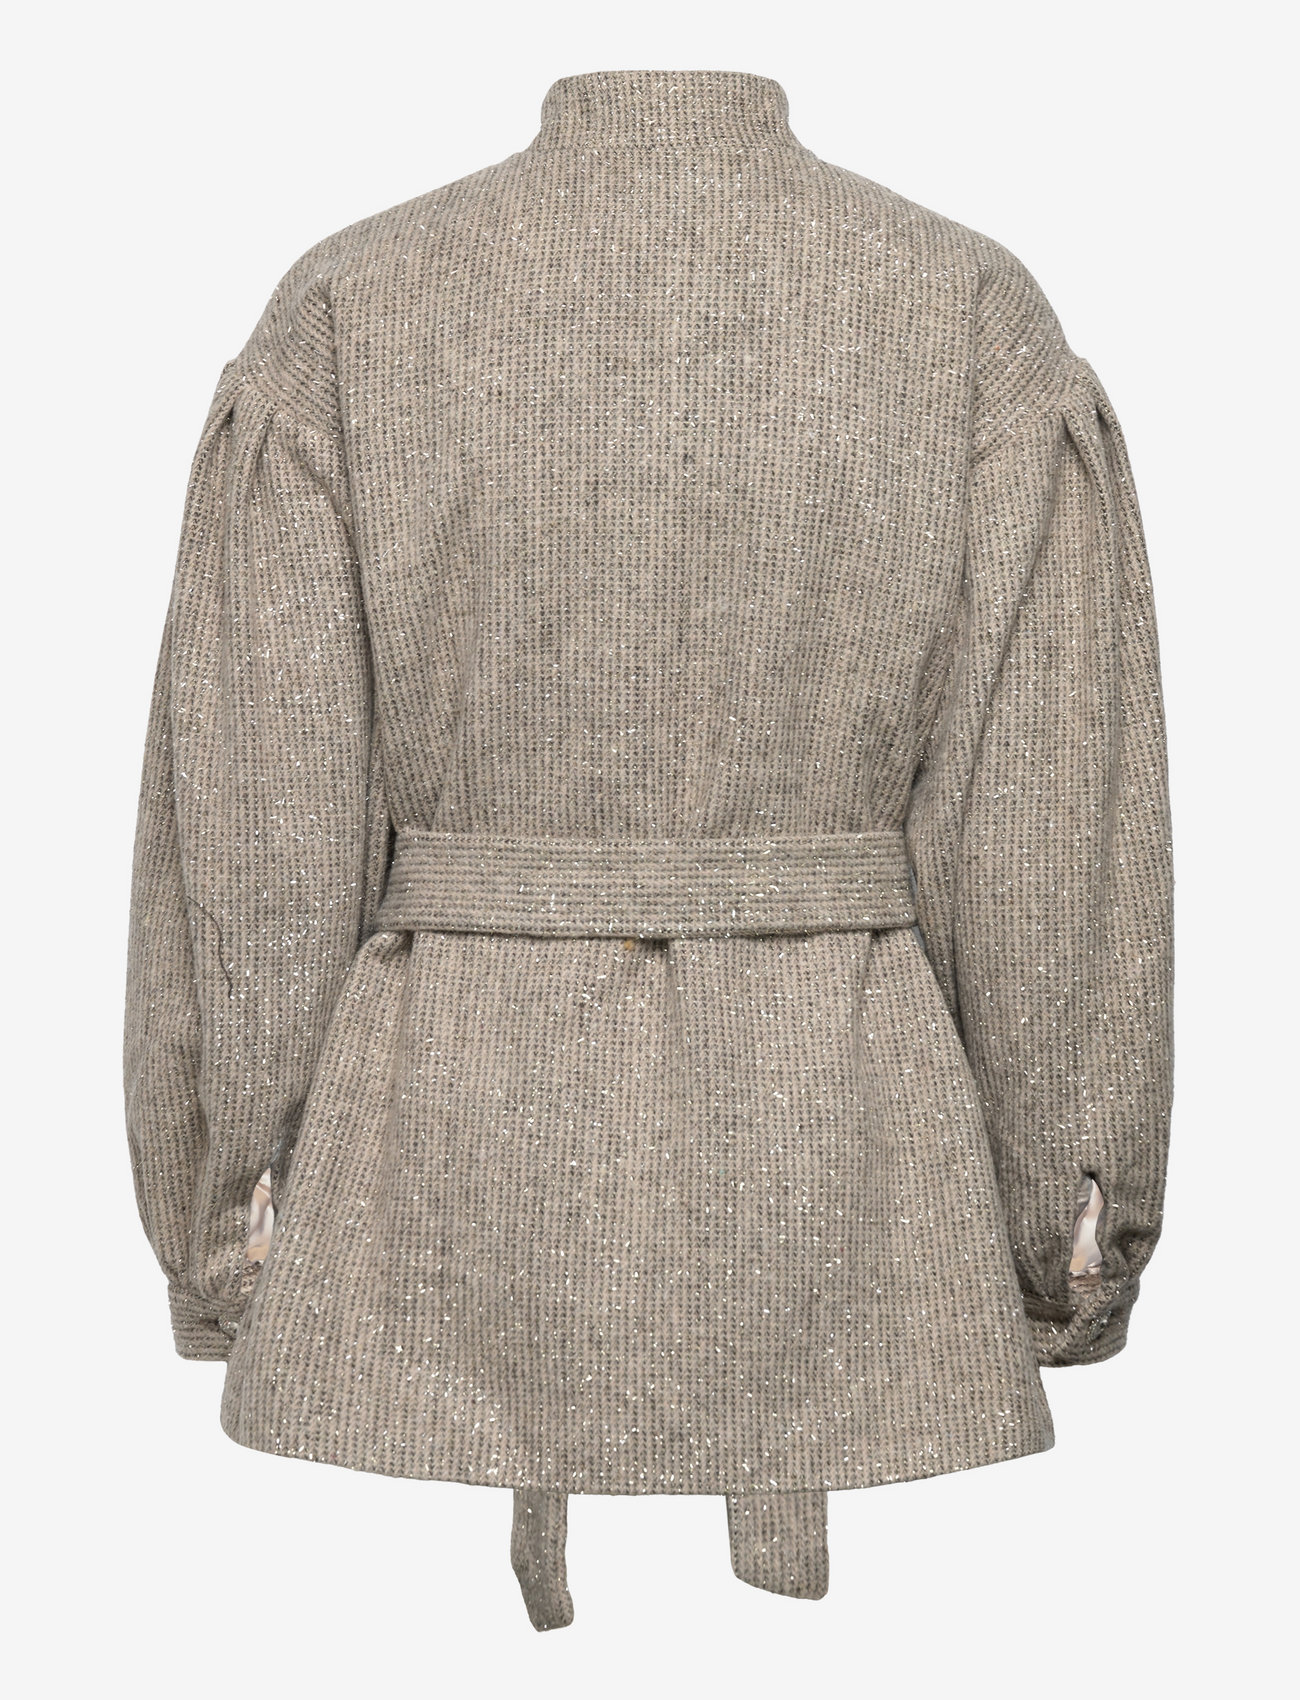 Bruuns Bazaar - BergeniaBBMaddi jacket - winter jackets - plaza taupe - 1